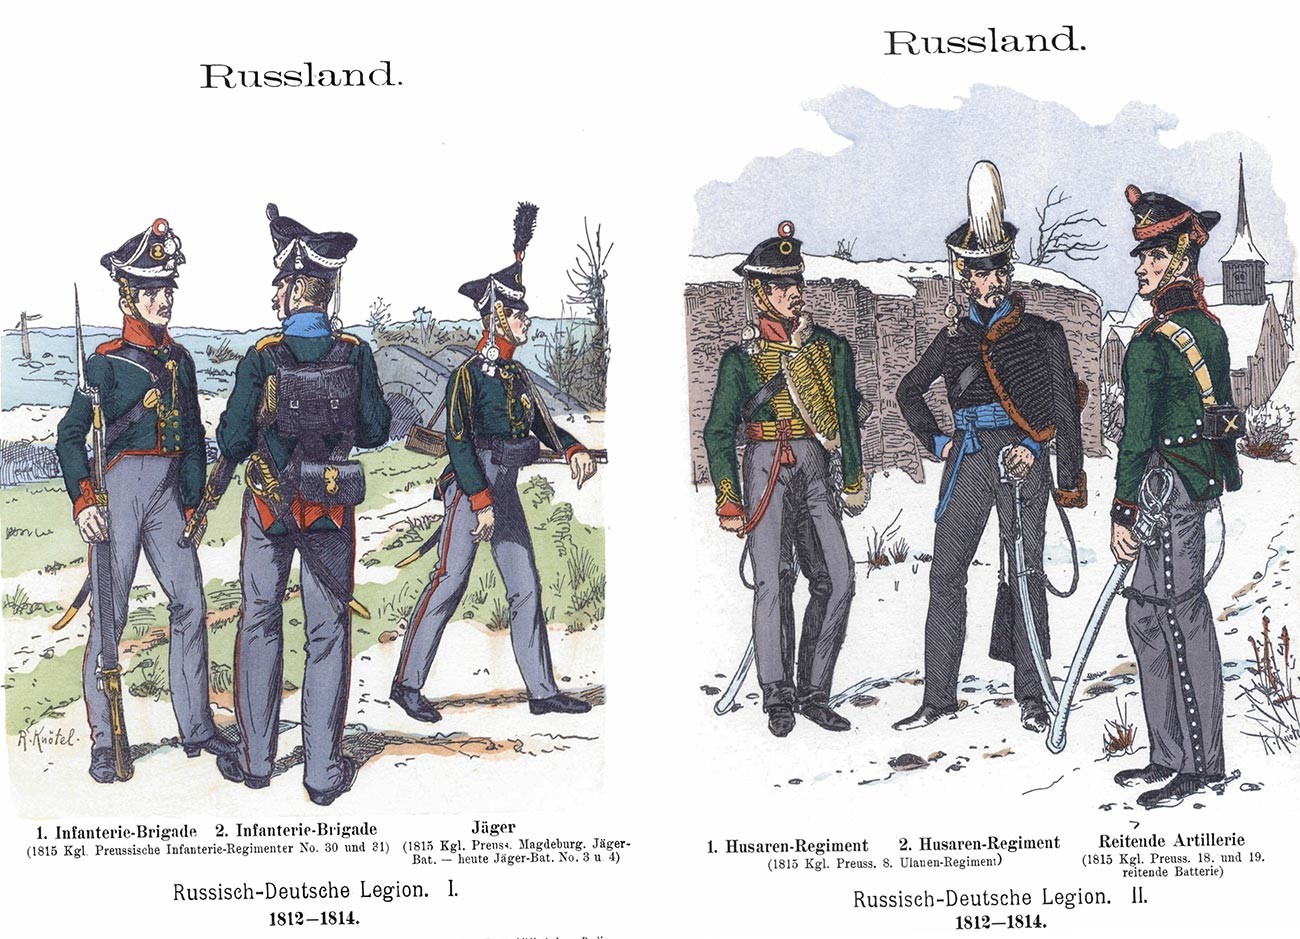 The Russian-German Legion.